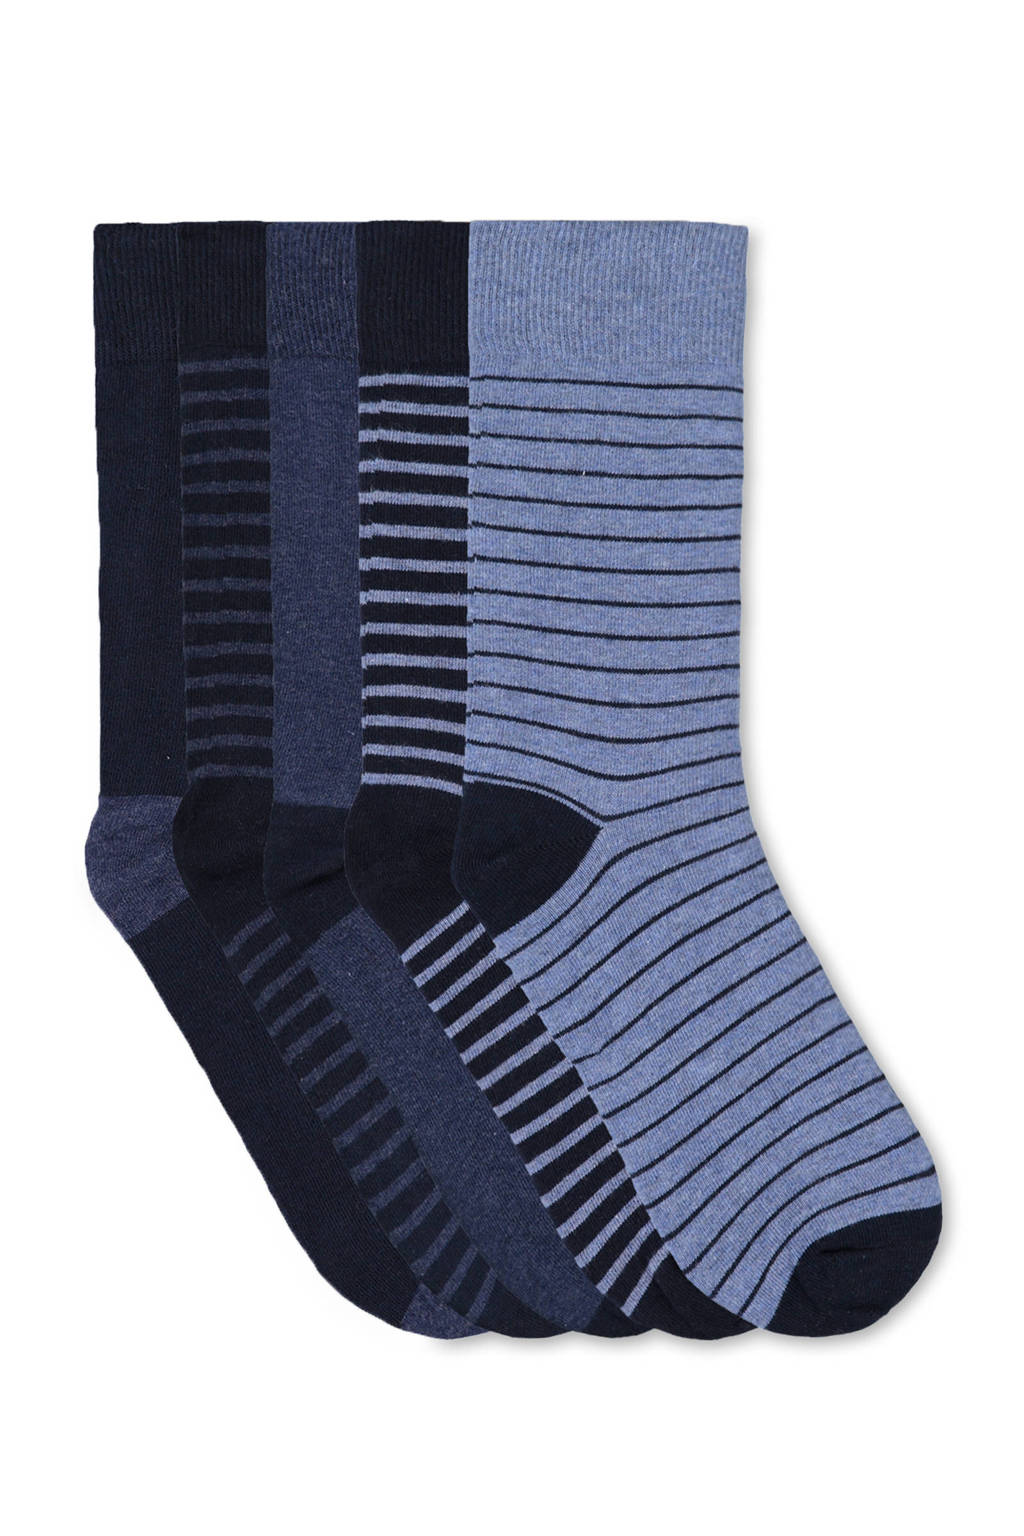 WE Fashion sokken - set van 5 blauw, Blauw/marine